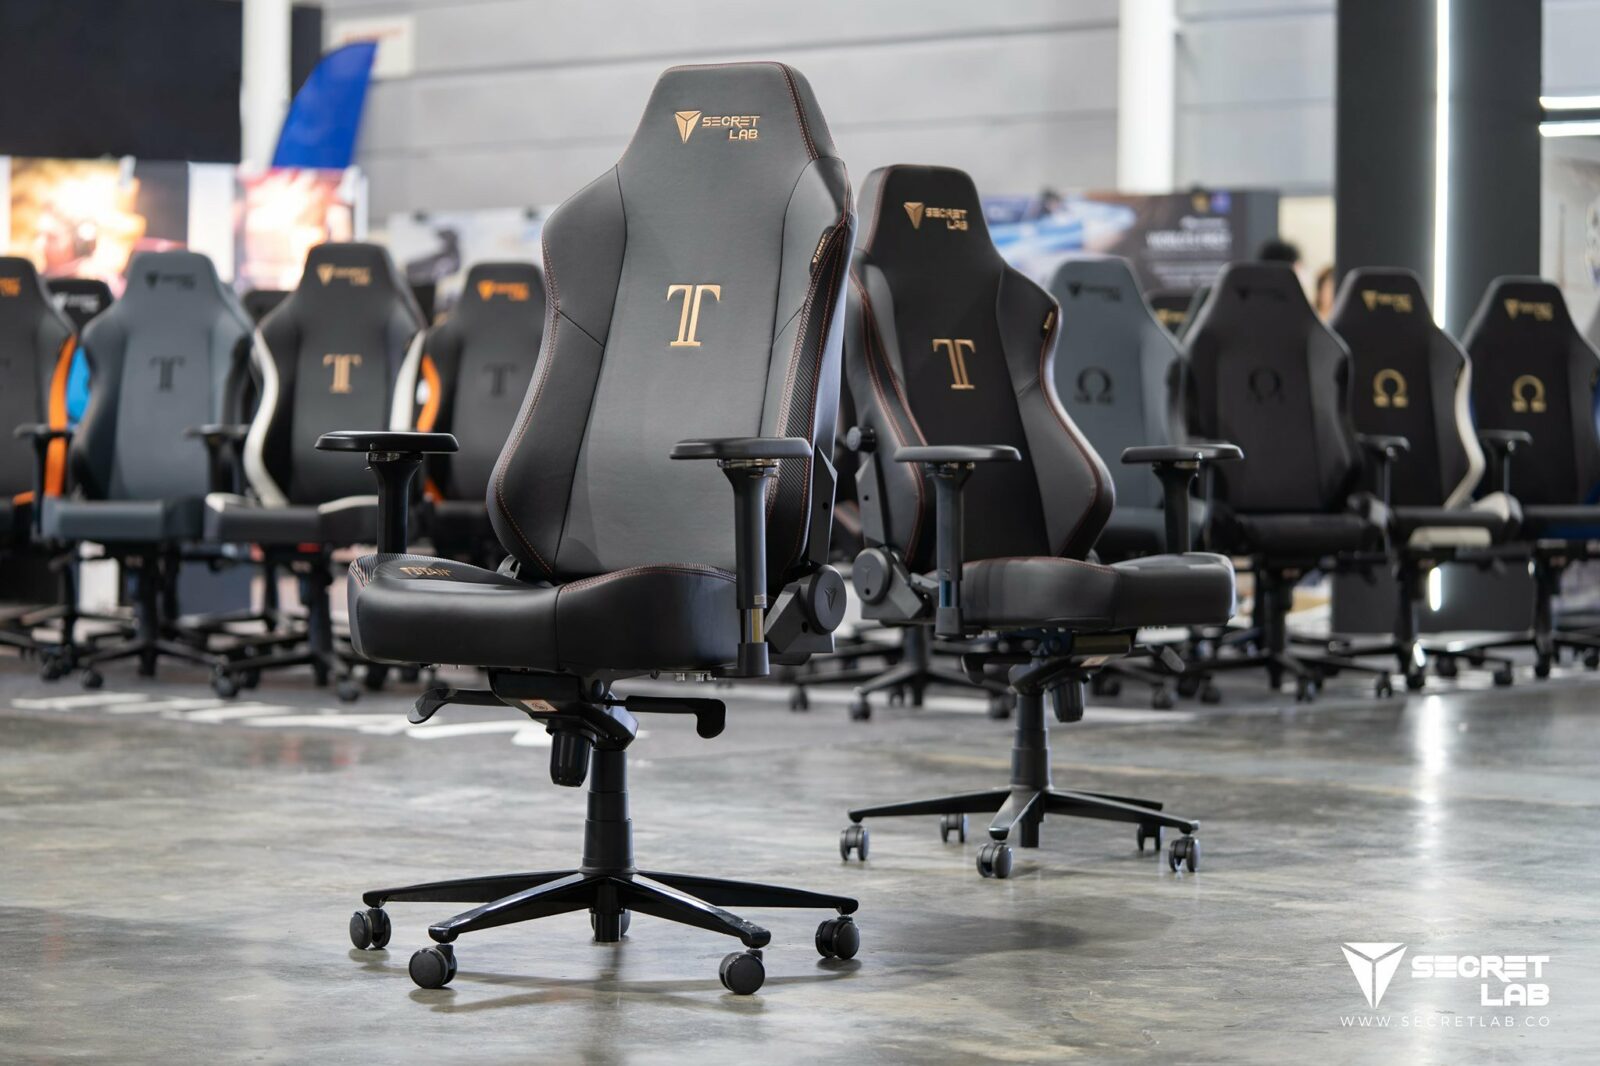 Are Secretlab Titan chairs comfortable?